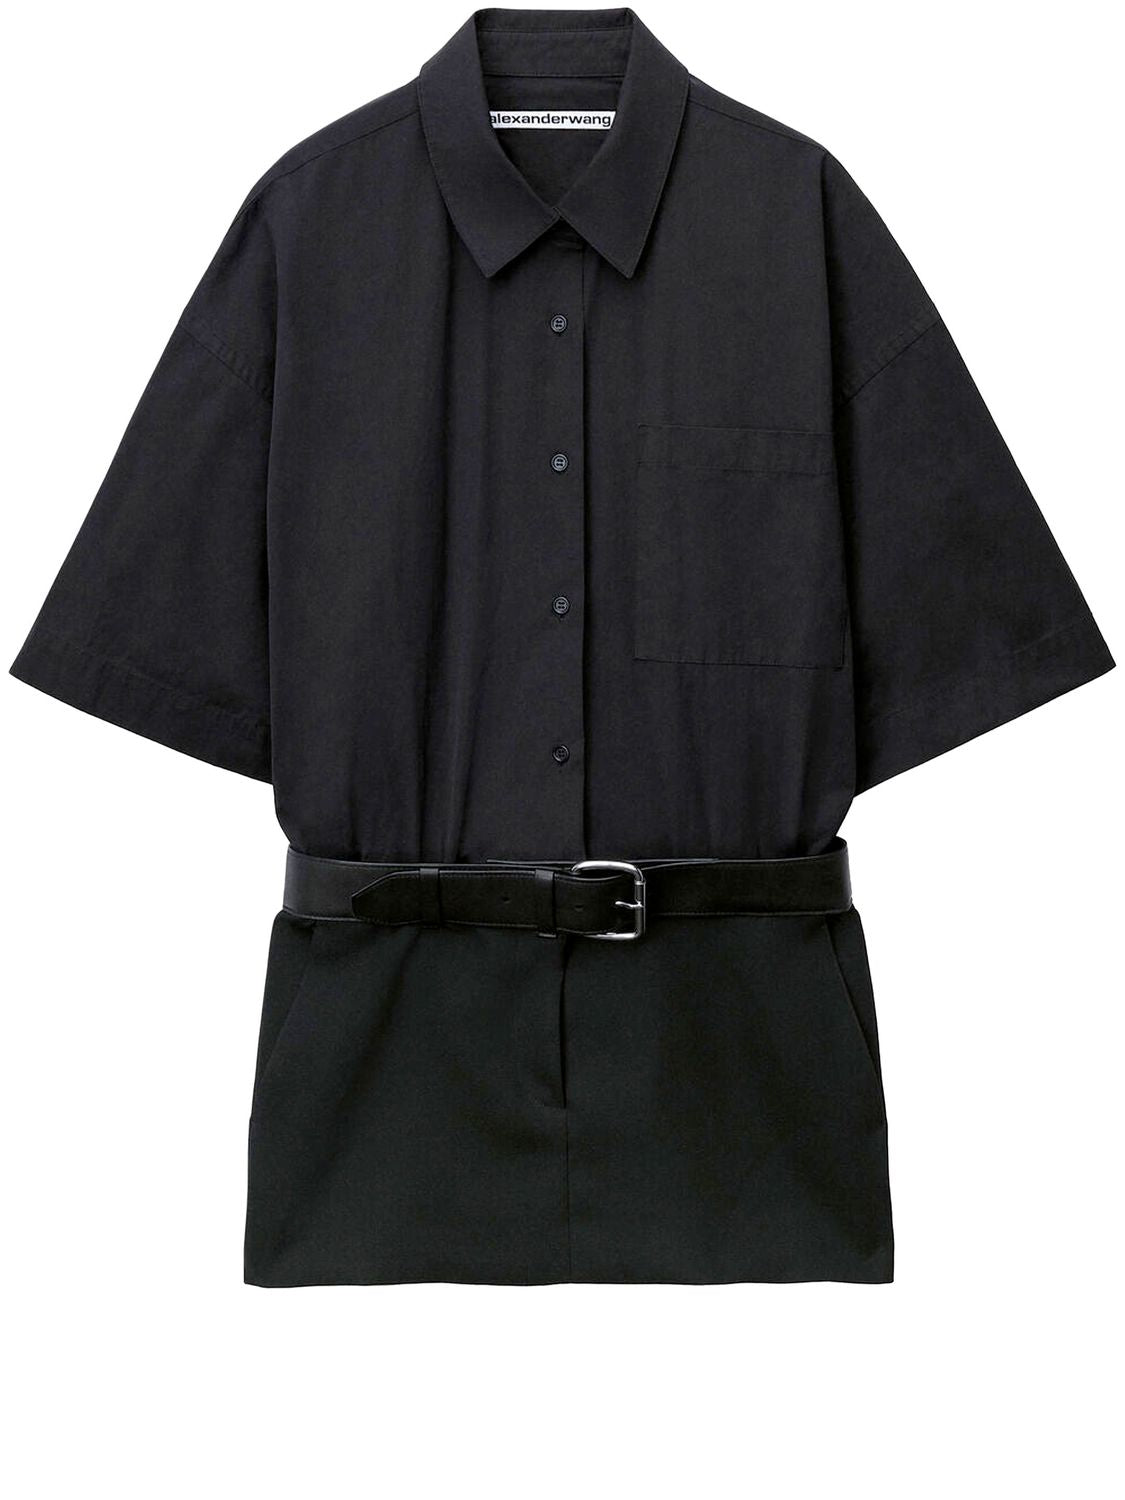 Shop Alexander Wang Black Mini Shirtdress With Belted Waistband For Women